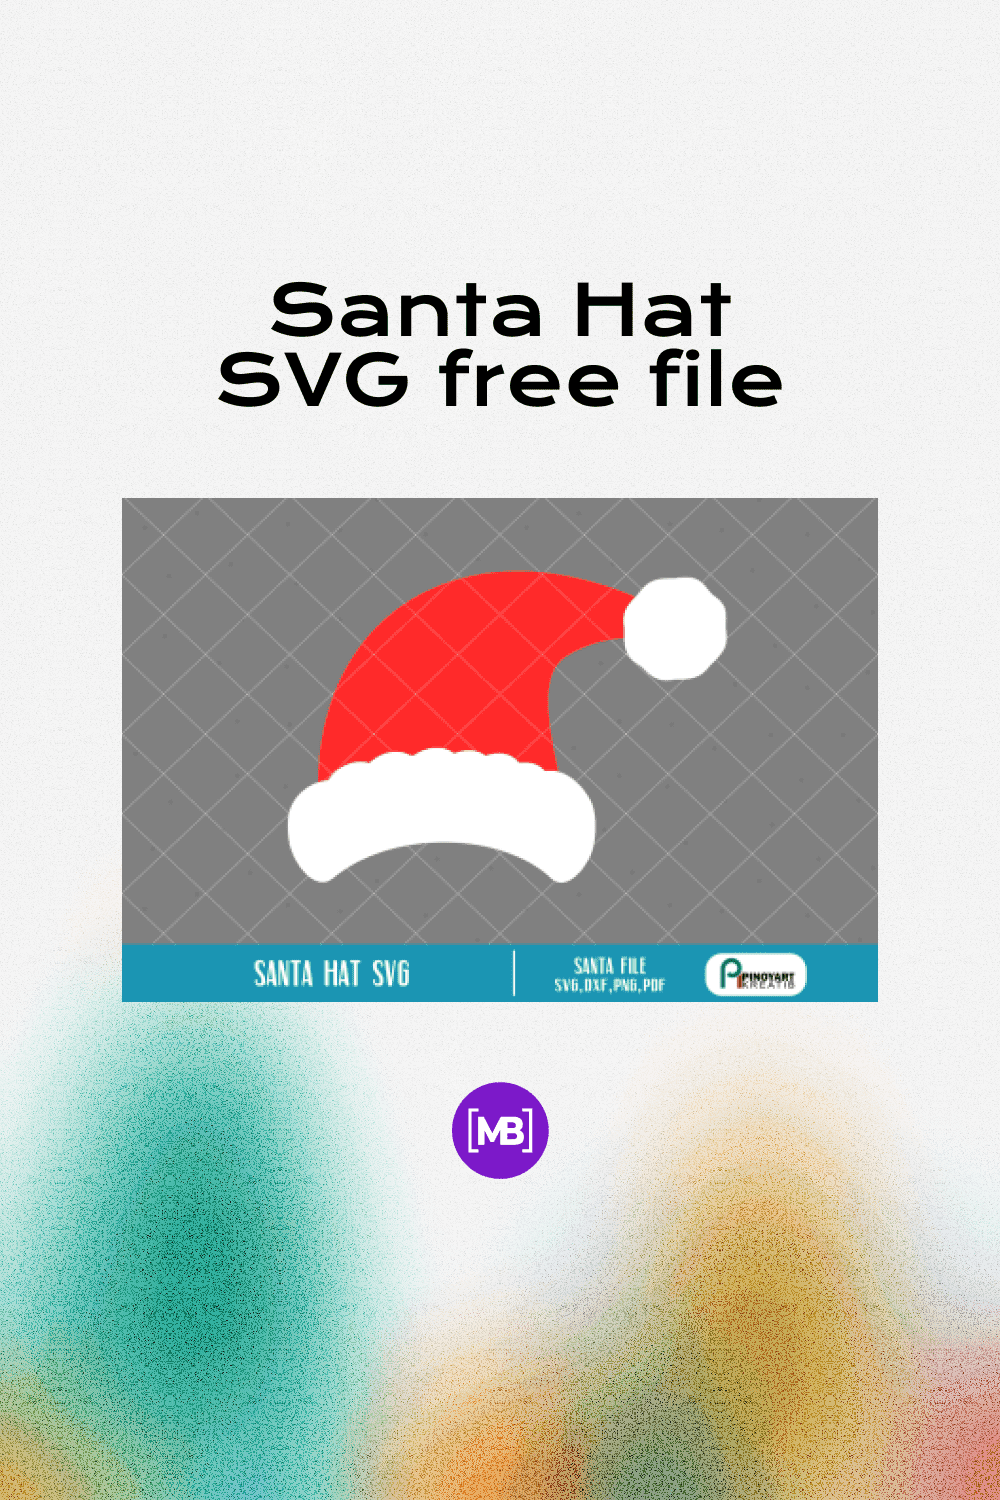 Santa Hat SVG free file.